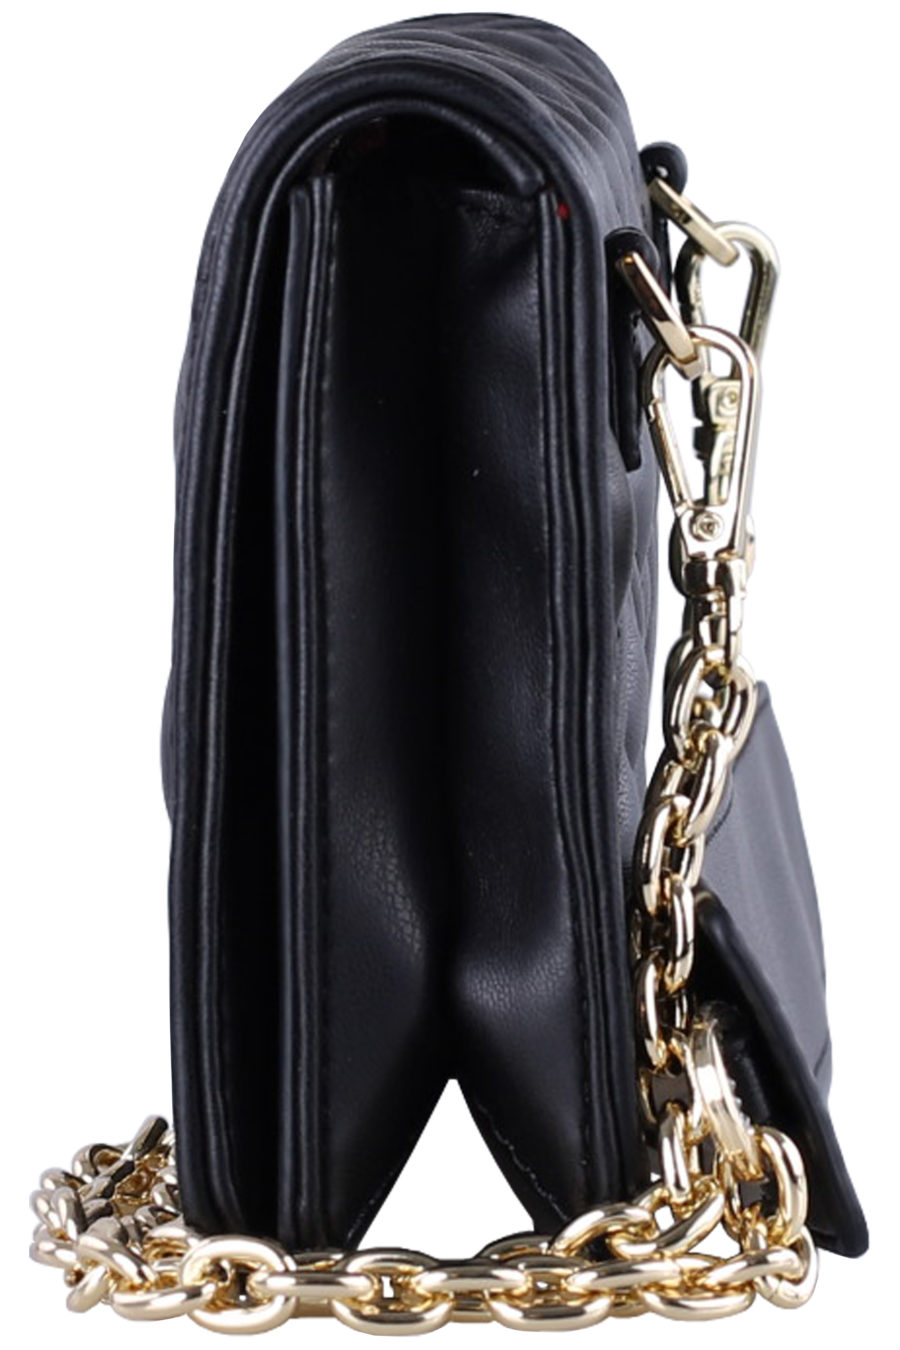 Black shoulder bag with "gold metal logo" - f5f6e7803e9be844c22879c9b12cacda5b8f4dcb